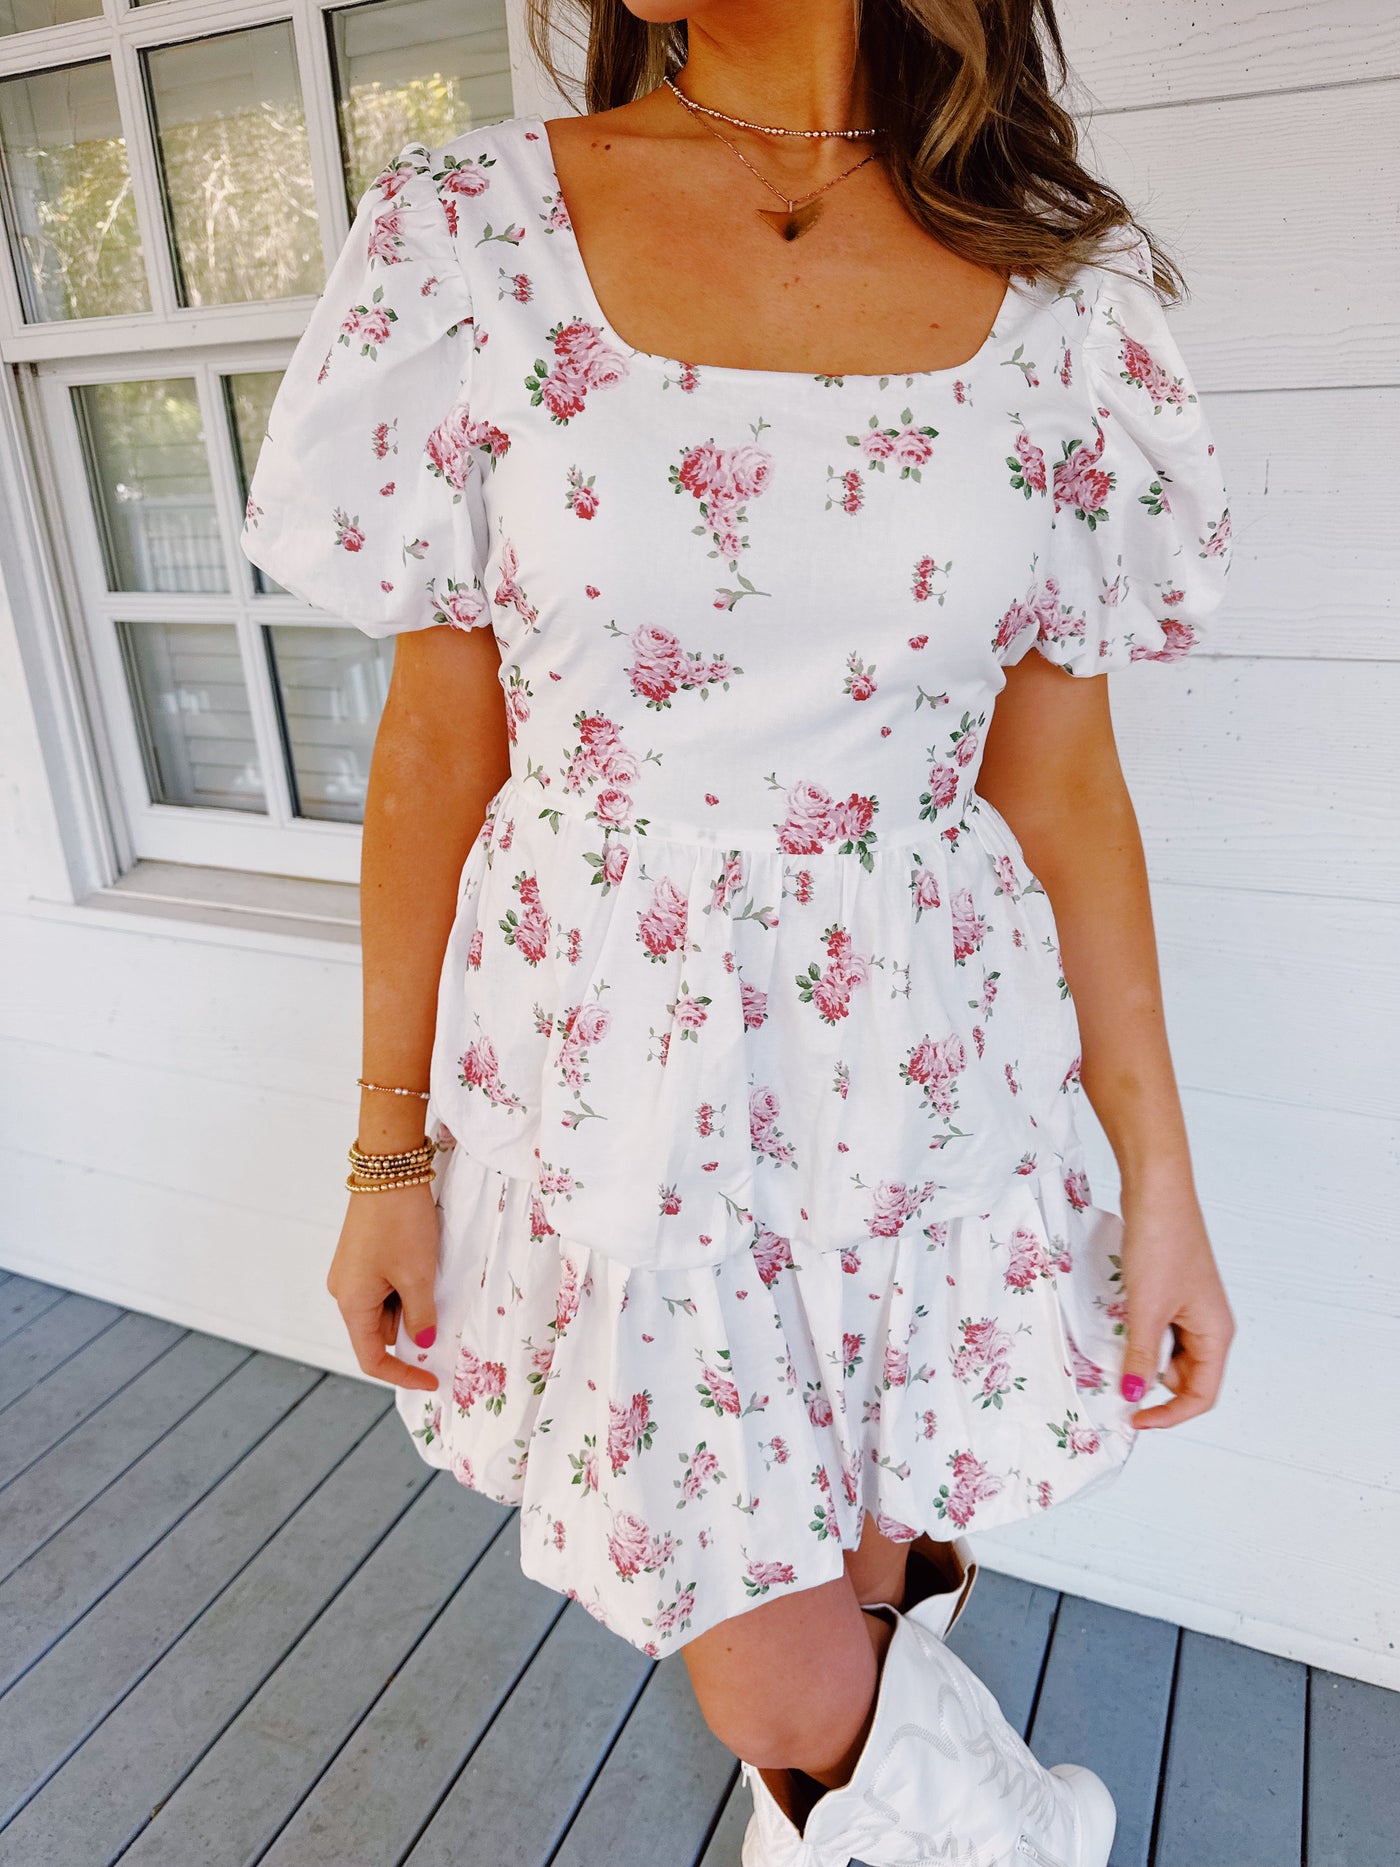 Kaley Floral Dress - White/Pink Floral